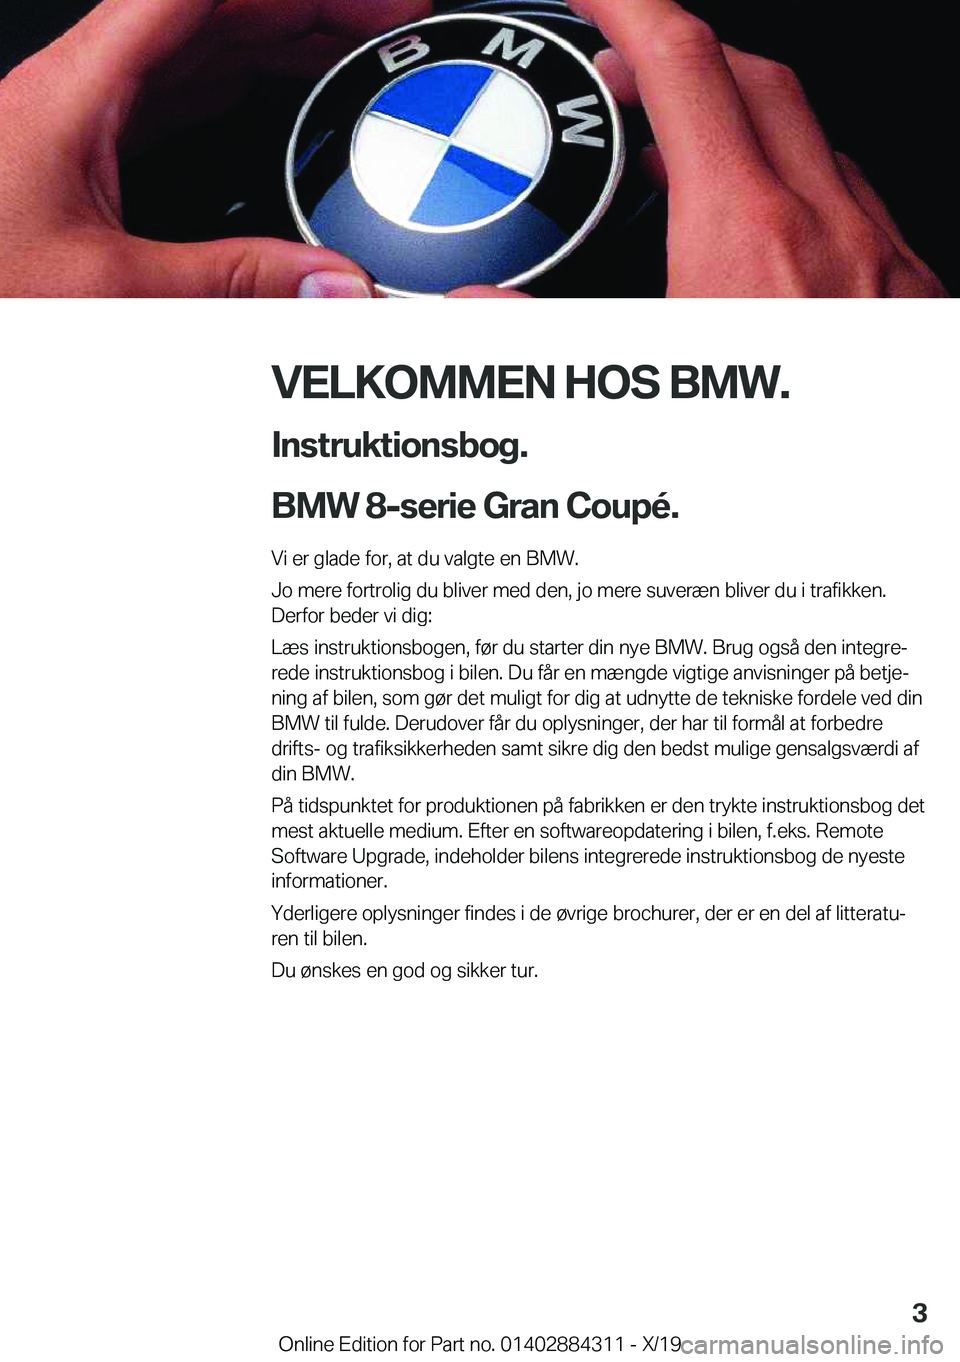 BMW 8 SERIES GRAN COUPE 2020  InstruktionsbØger (in Danish) �V�E�L�K�O�M�M�E�N��H�O�S��B�M�W�.
�I�n�s�t�r�u�k�t�i�o�n�s�b�o�g�.
�B�M�W��8�-�s�e�r�i�e��G�r�a�n��C�o�u�p�